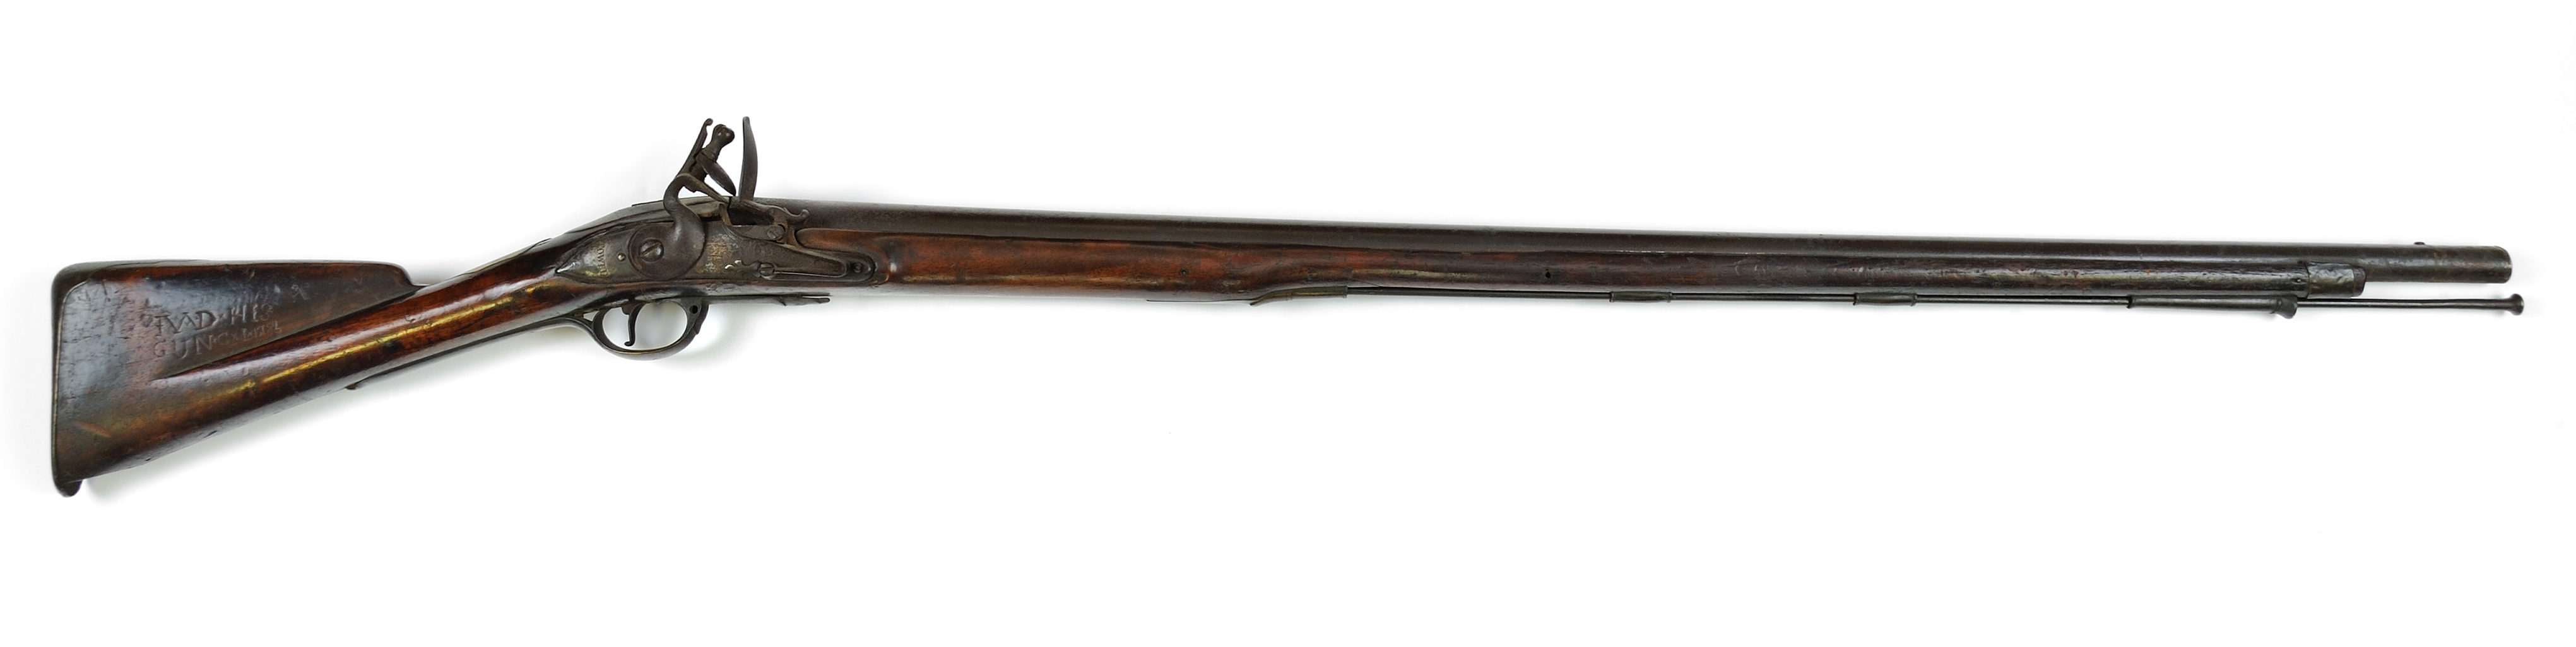 British Pattern 1769 Short-Land musket